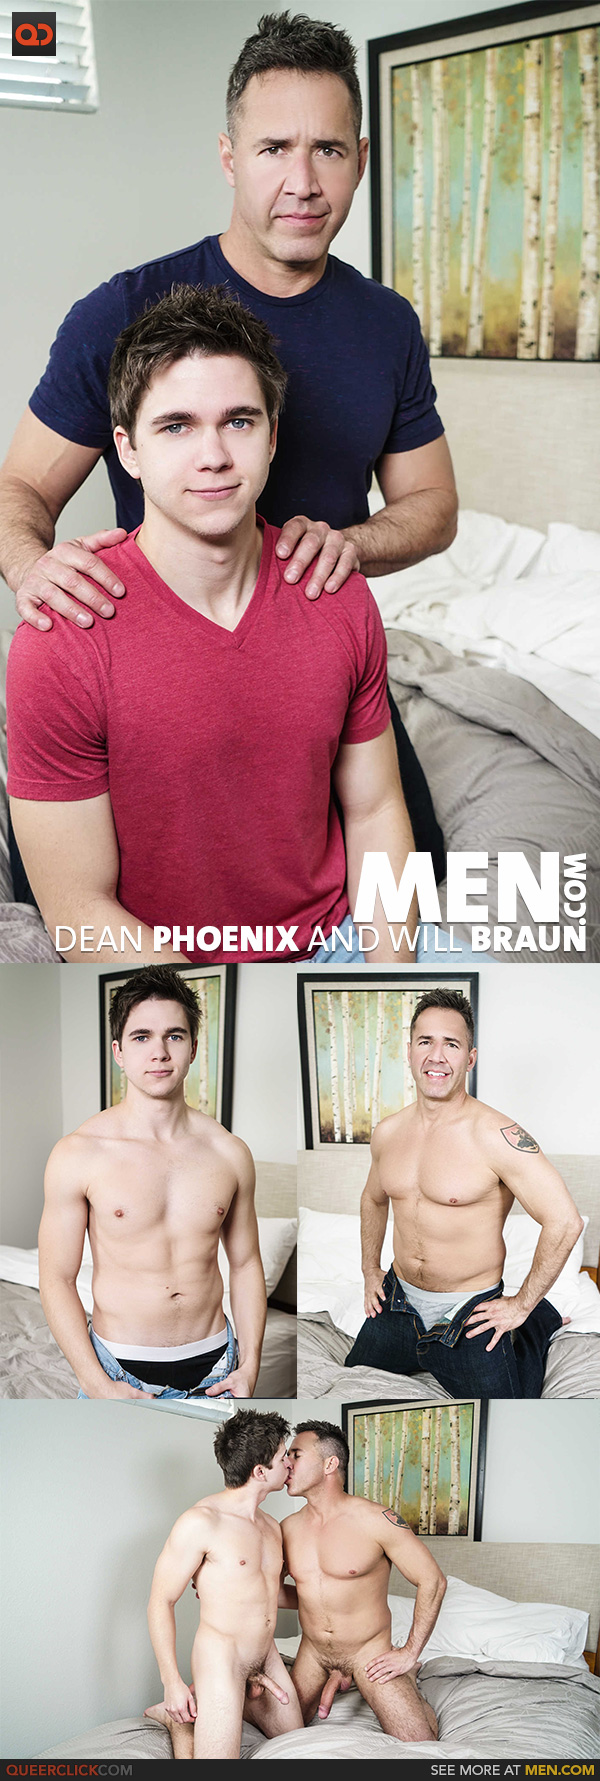 Men.com:  Dean Phoenix and Will Braun